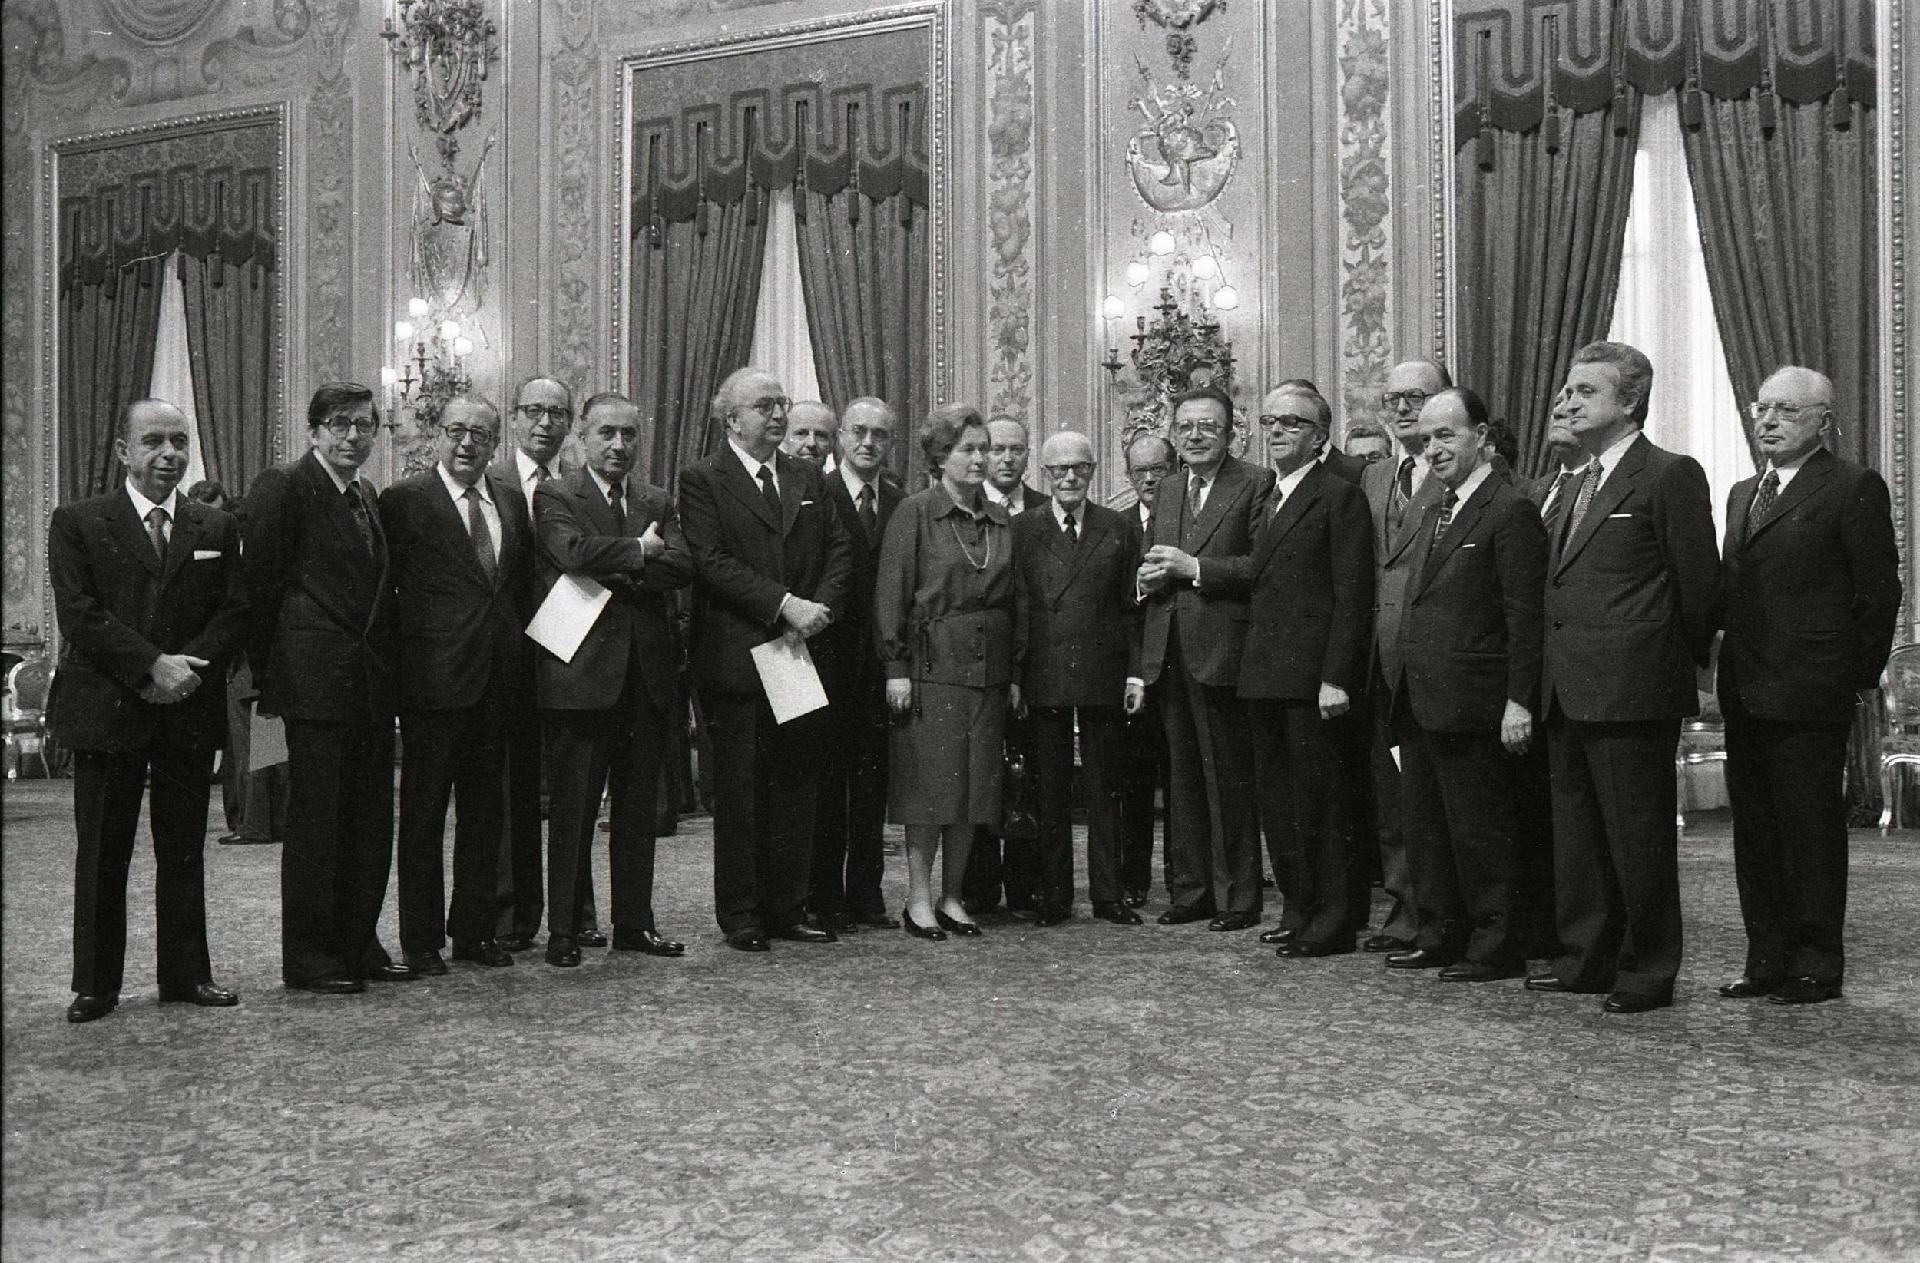 V Governo Andreotti, 21 marzo 1979